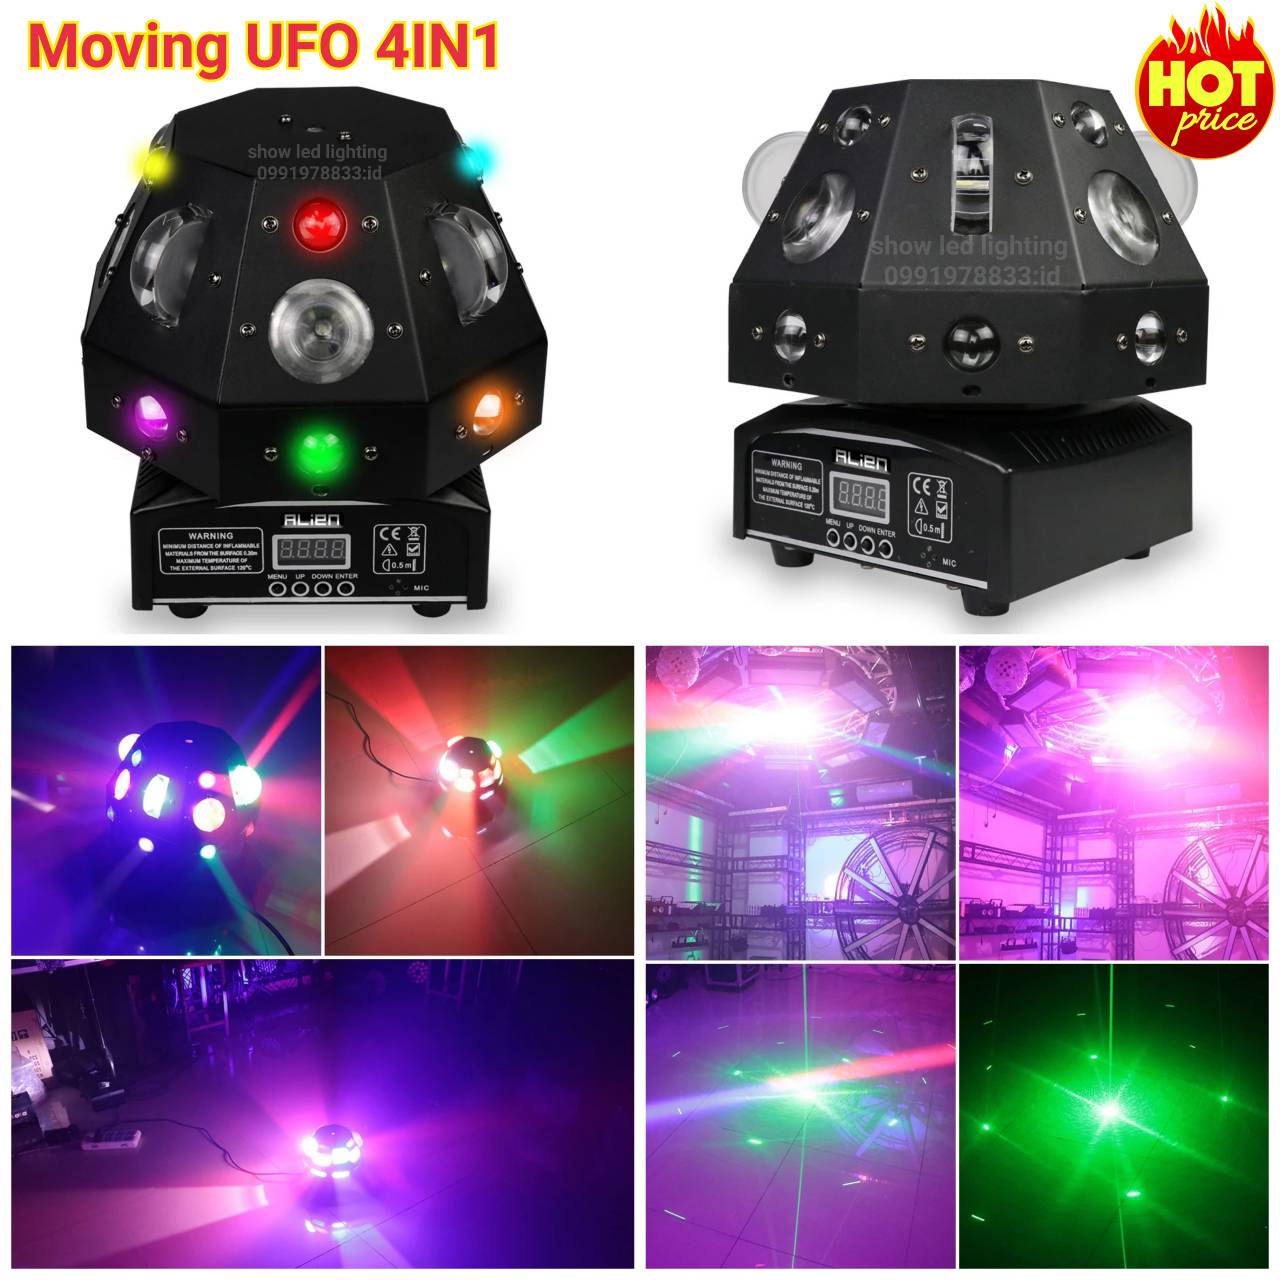 moving UFO 4in1 มูวิ่งเห็ด dicsco  light PARTY LIGHT ไฟดิสโก้ ไฟดิสโก้เทค ไฟ Laser light ไฟเทค ปาร์ตี้ ไฟเวที ดิสโก้ผับ ไฟงานปาร์ตี้ ไฟเวทีแสง สี